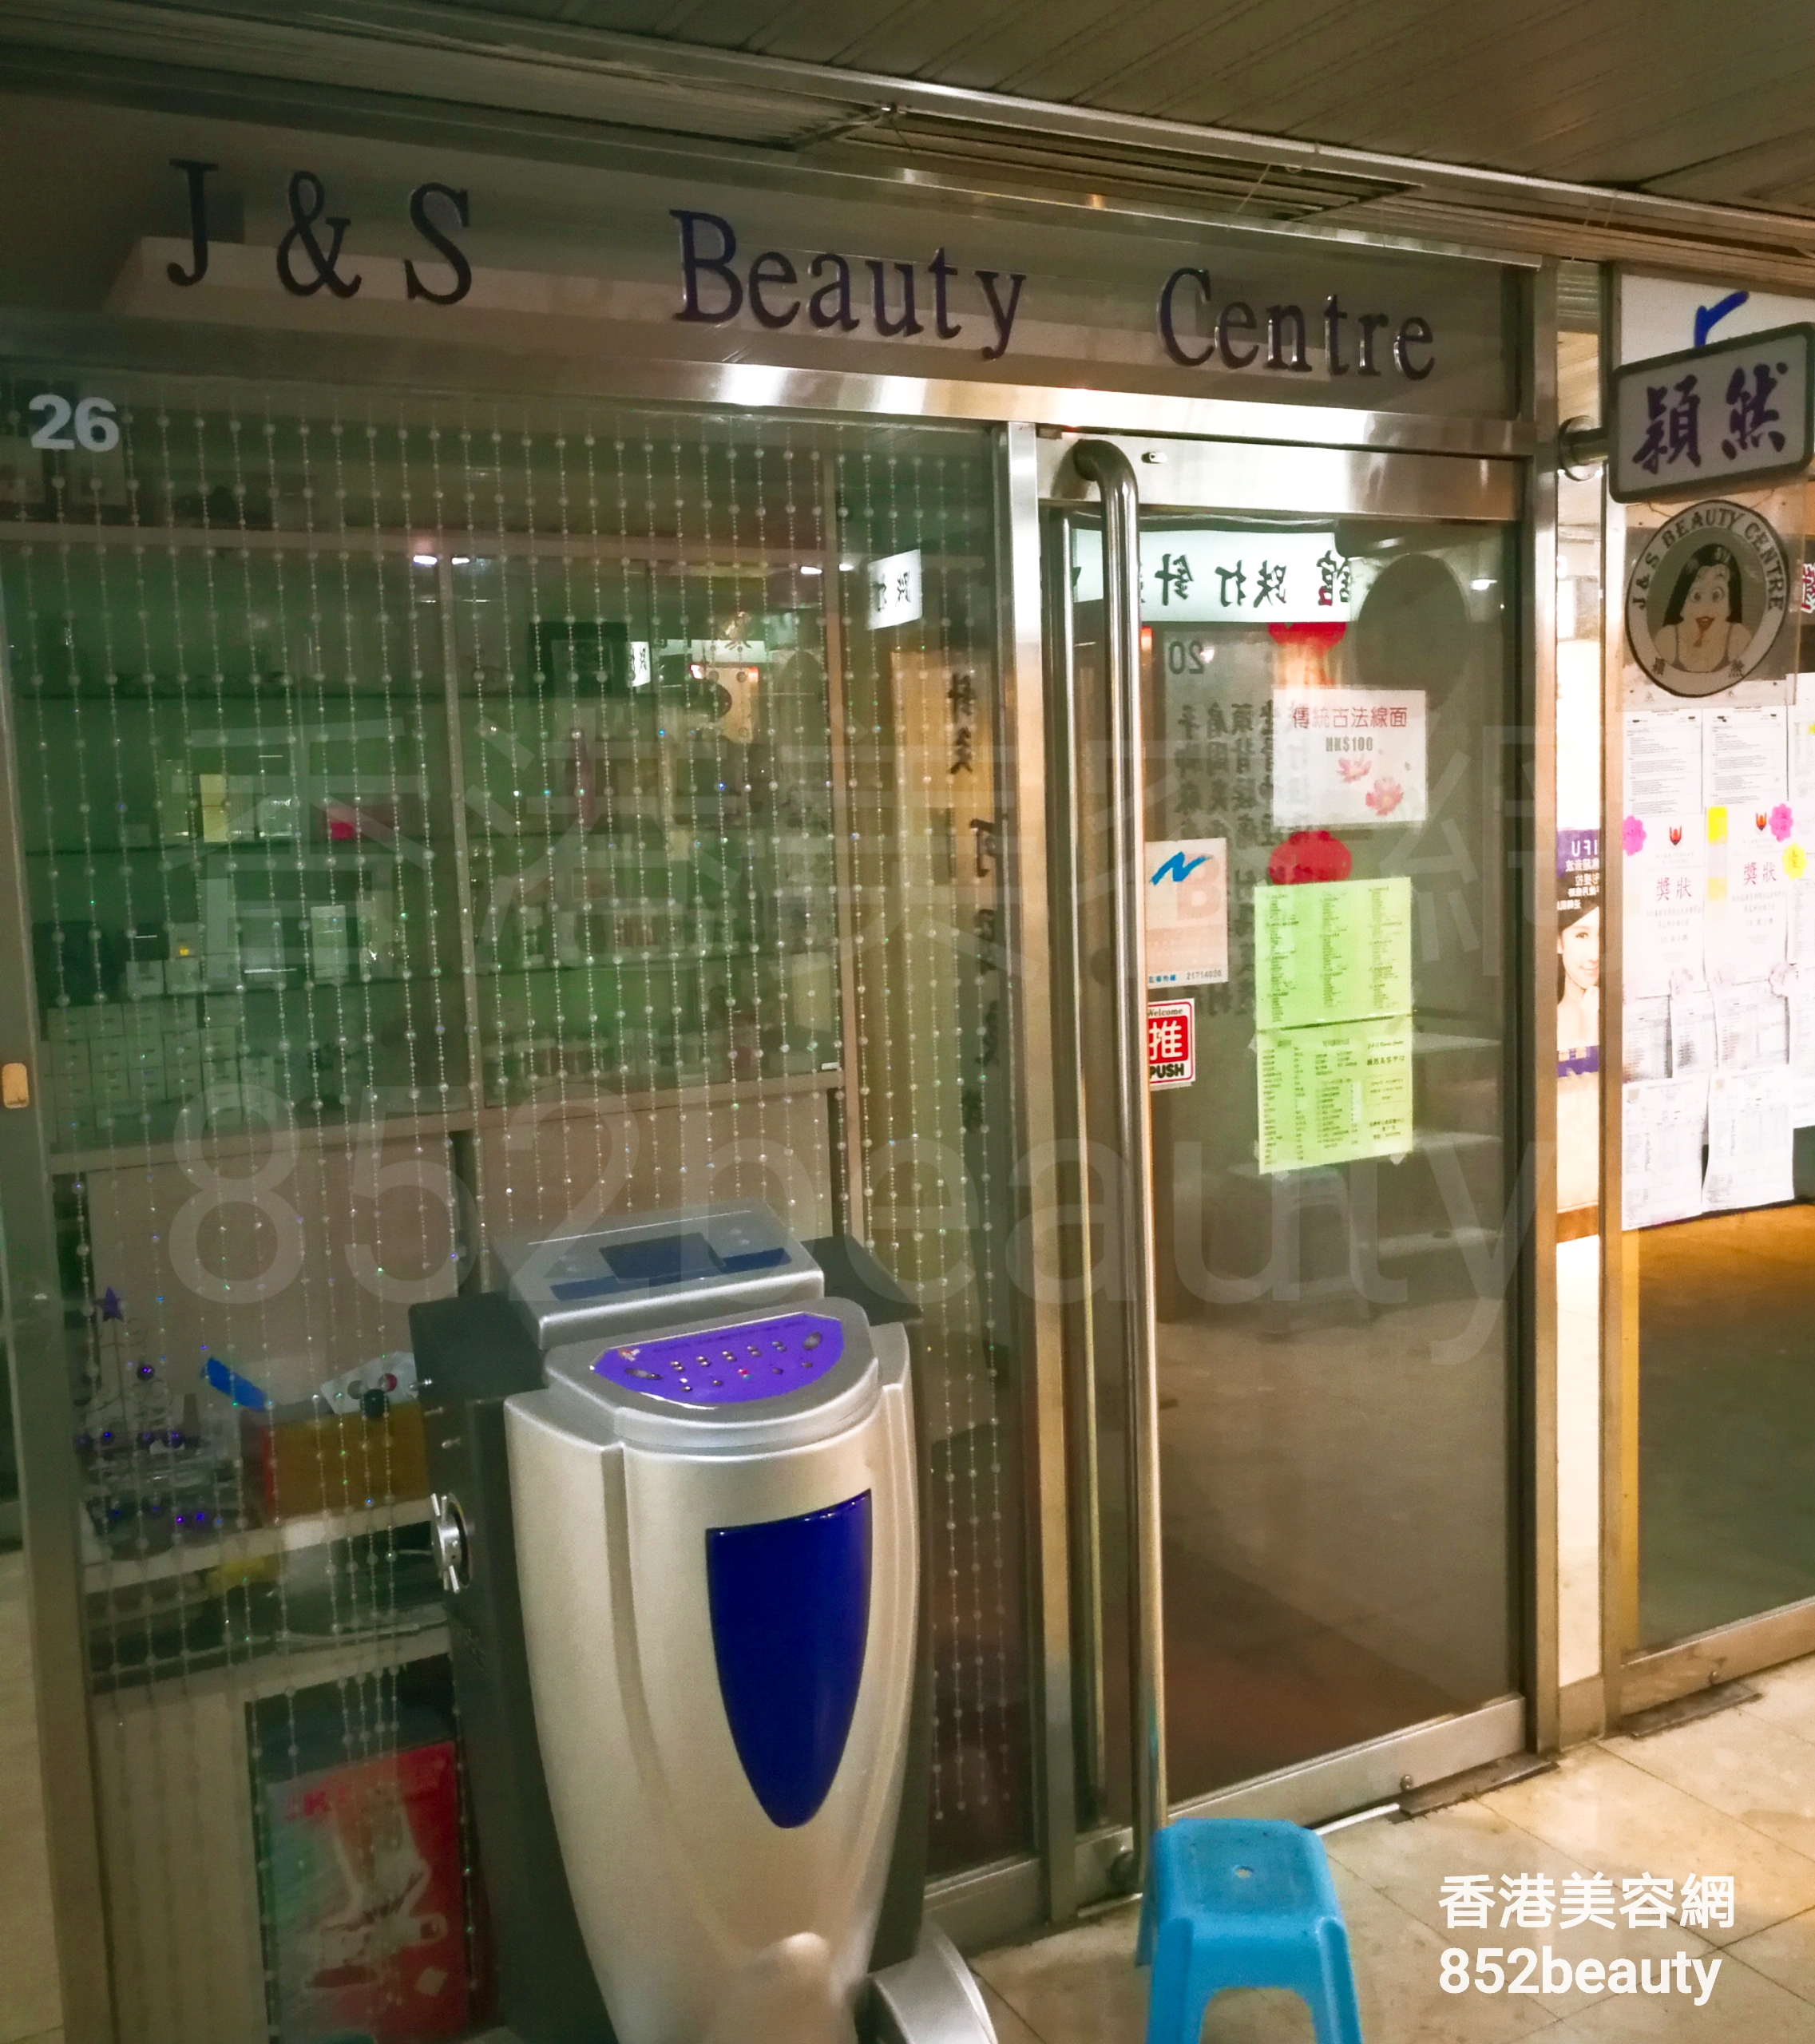 Facial Care: J&S Beauty Centre 穎然美容中心